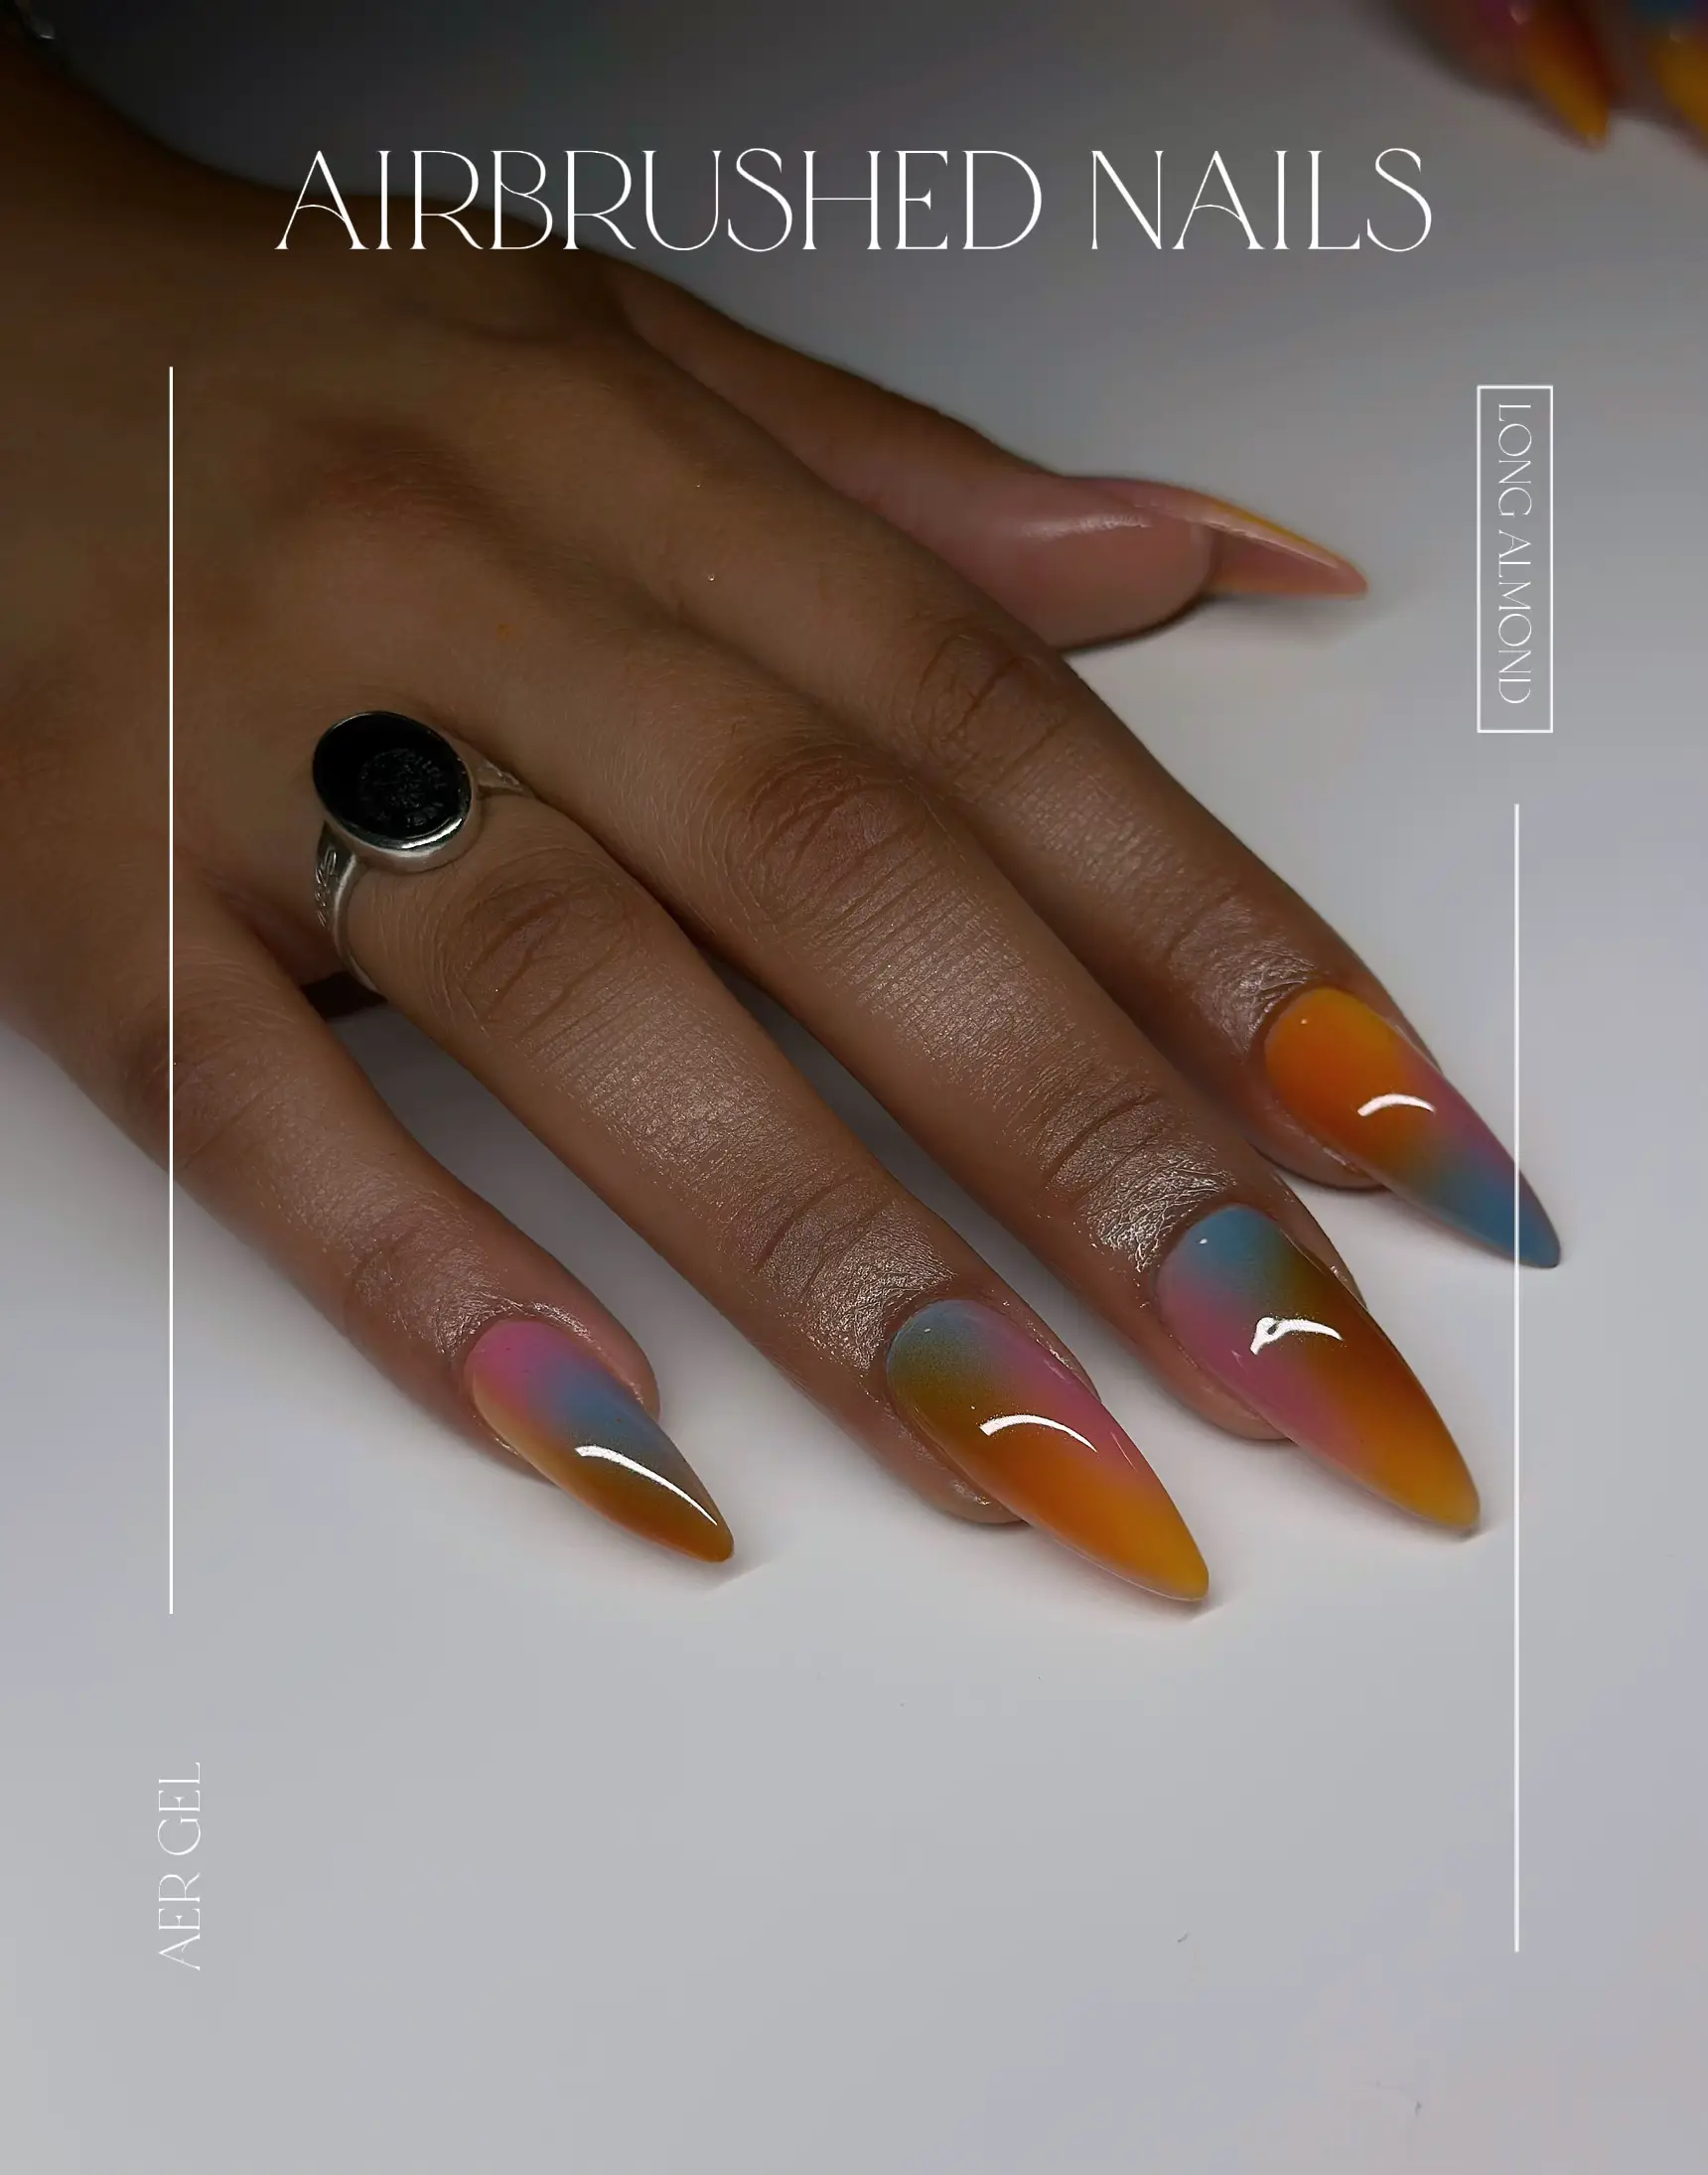 airbrush + chrome 🔥  Gel nails, Stylish nails, Airbrush nails